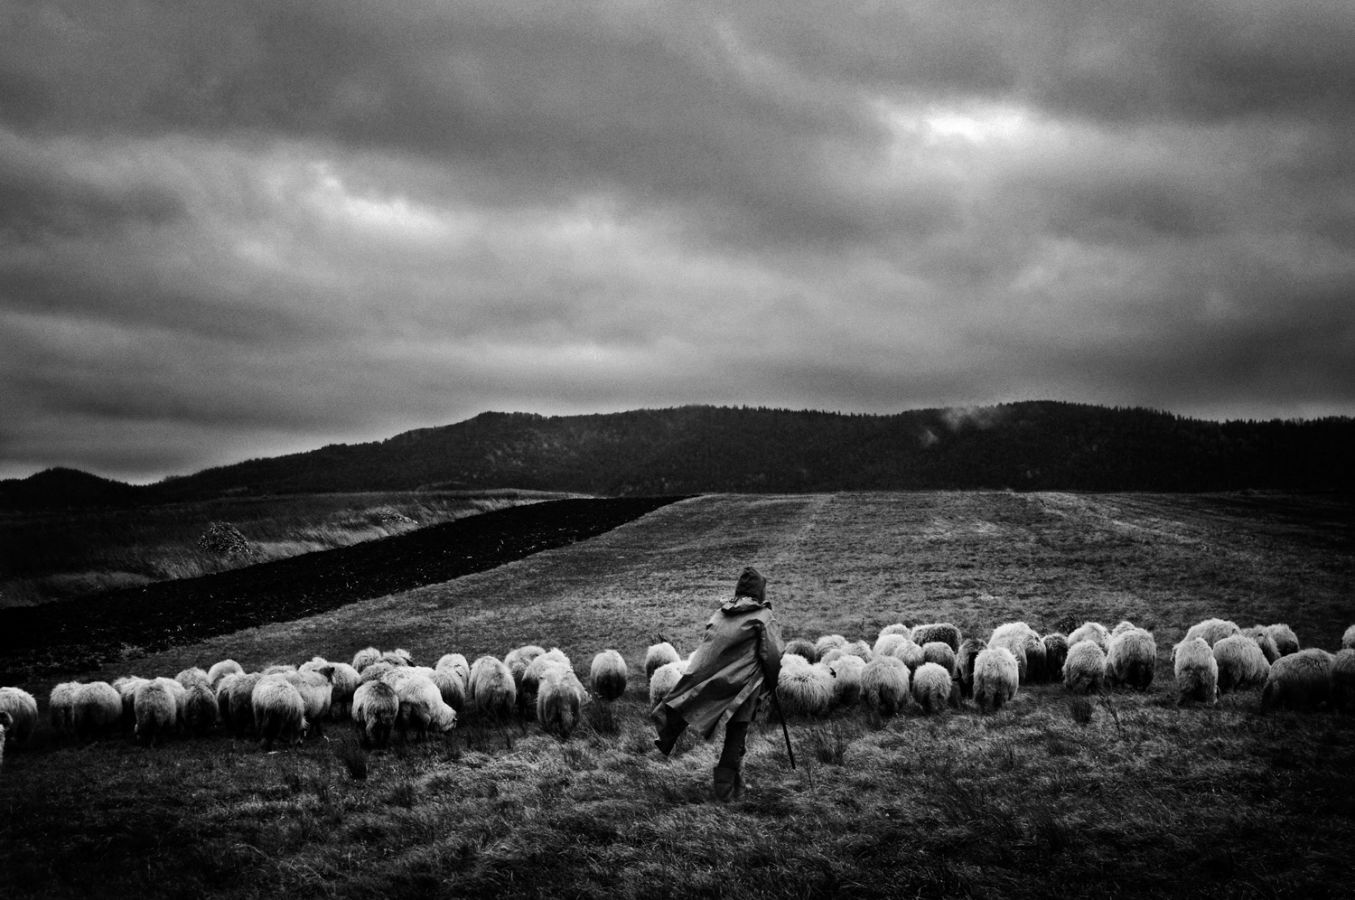 The shepherd in Moldova, Romania